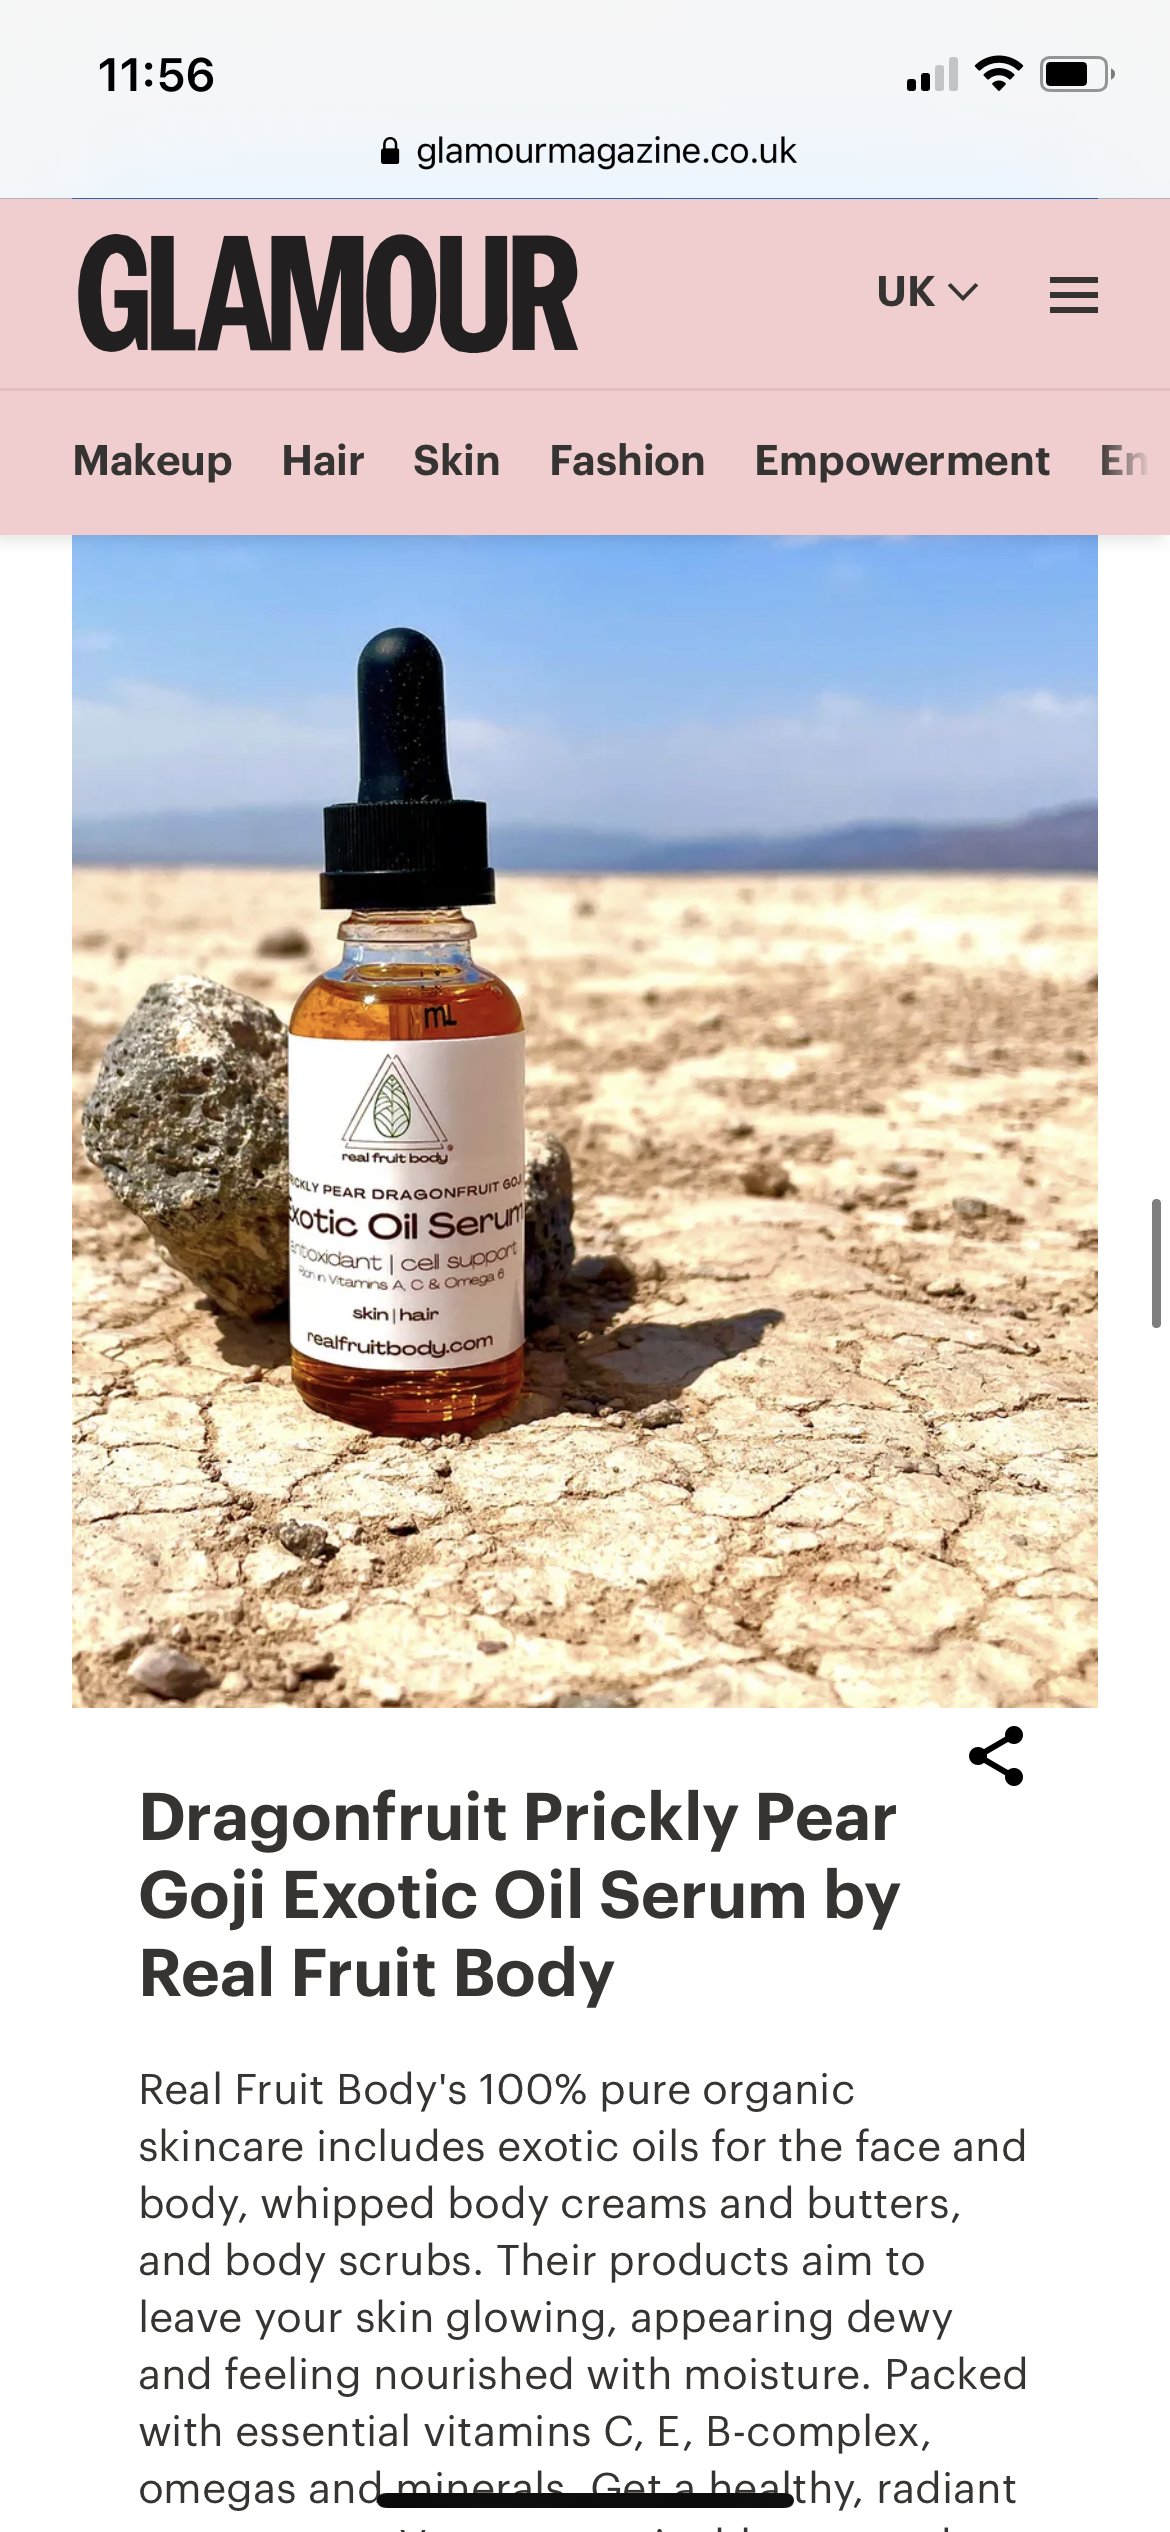 Dragon Fruit Prickly Pear Goji Exotic Oil Serum